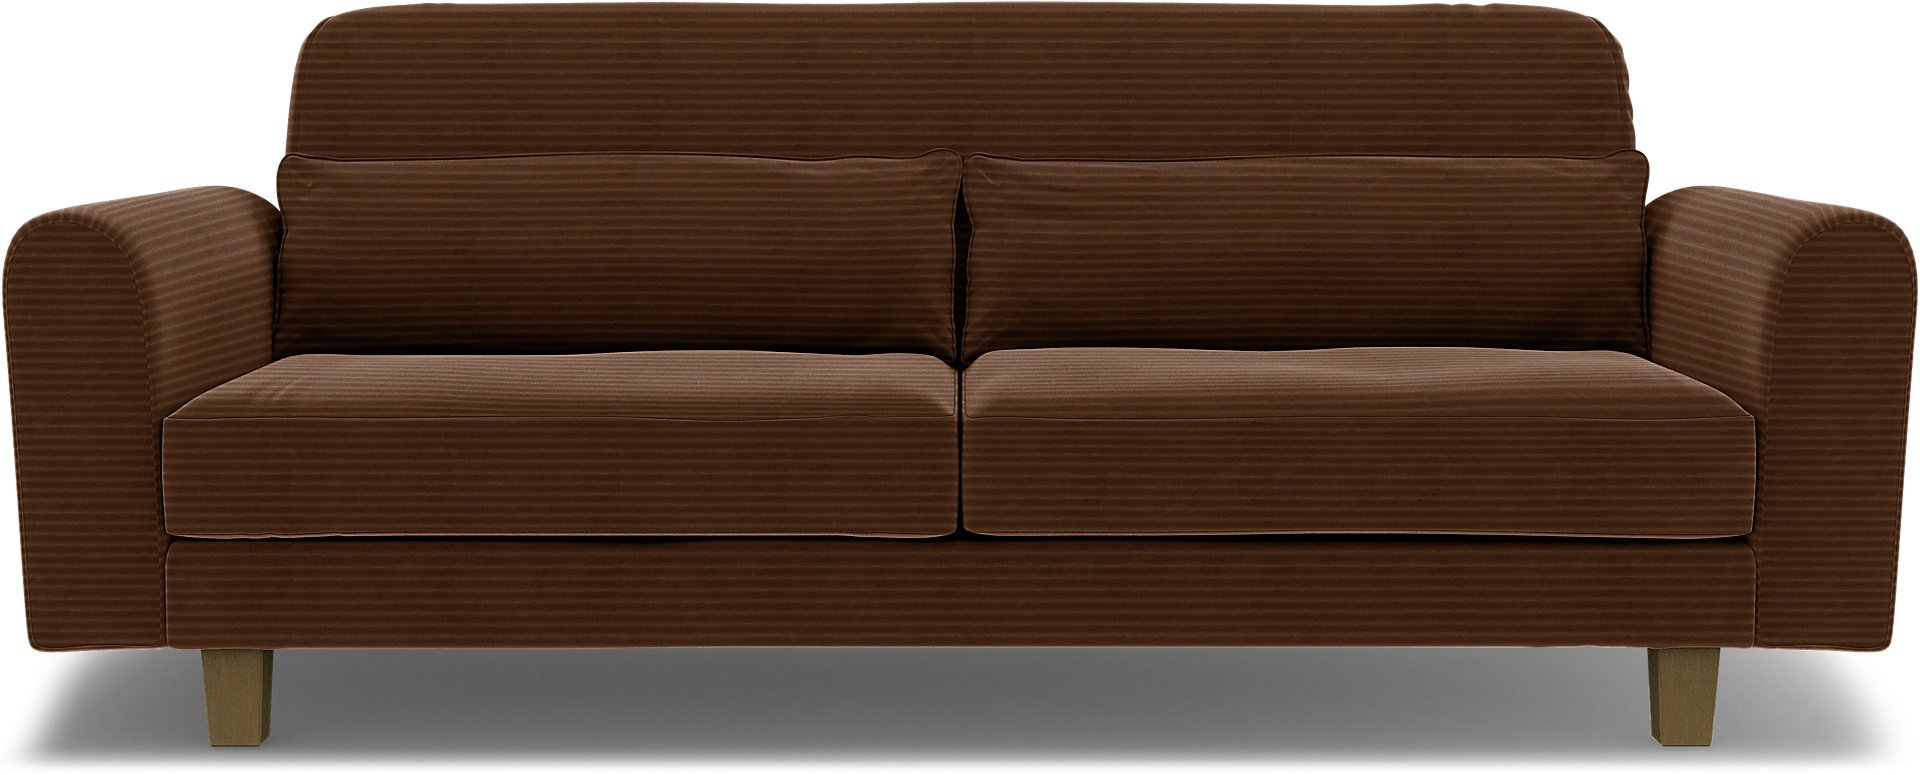 IKEA - Nikkala 3 Seater Sofa Cover, Chocolate Brown, Corduroy - Bemz